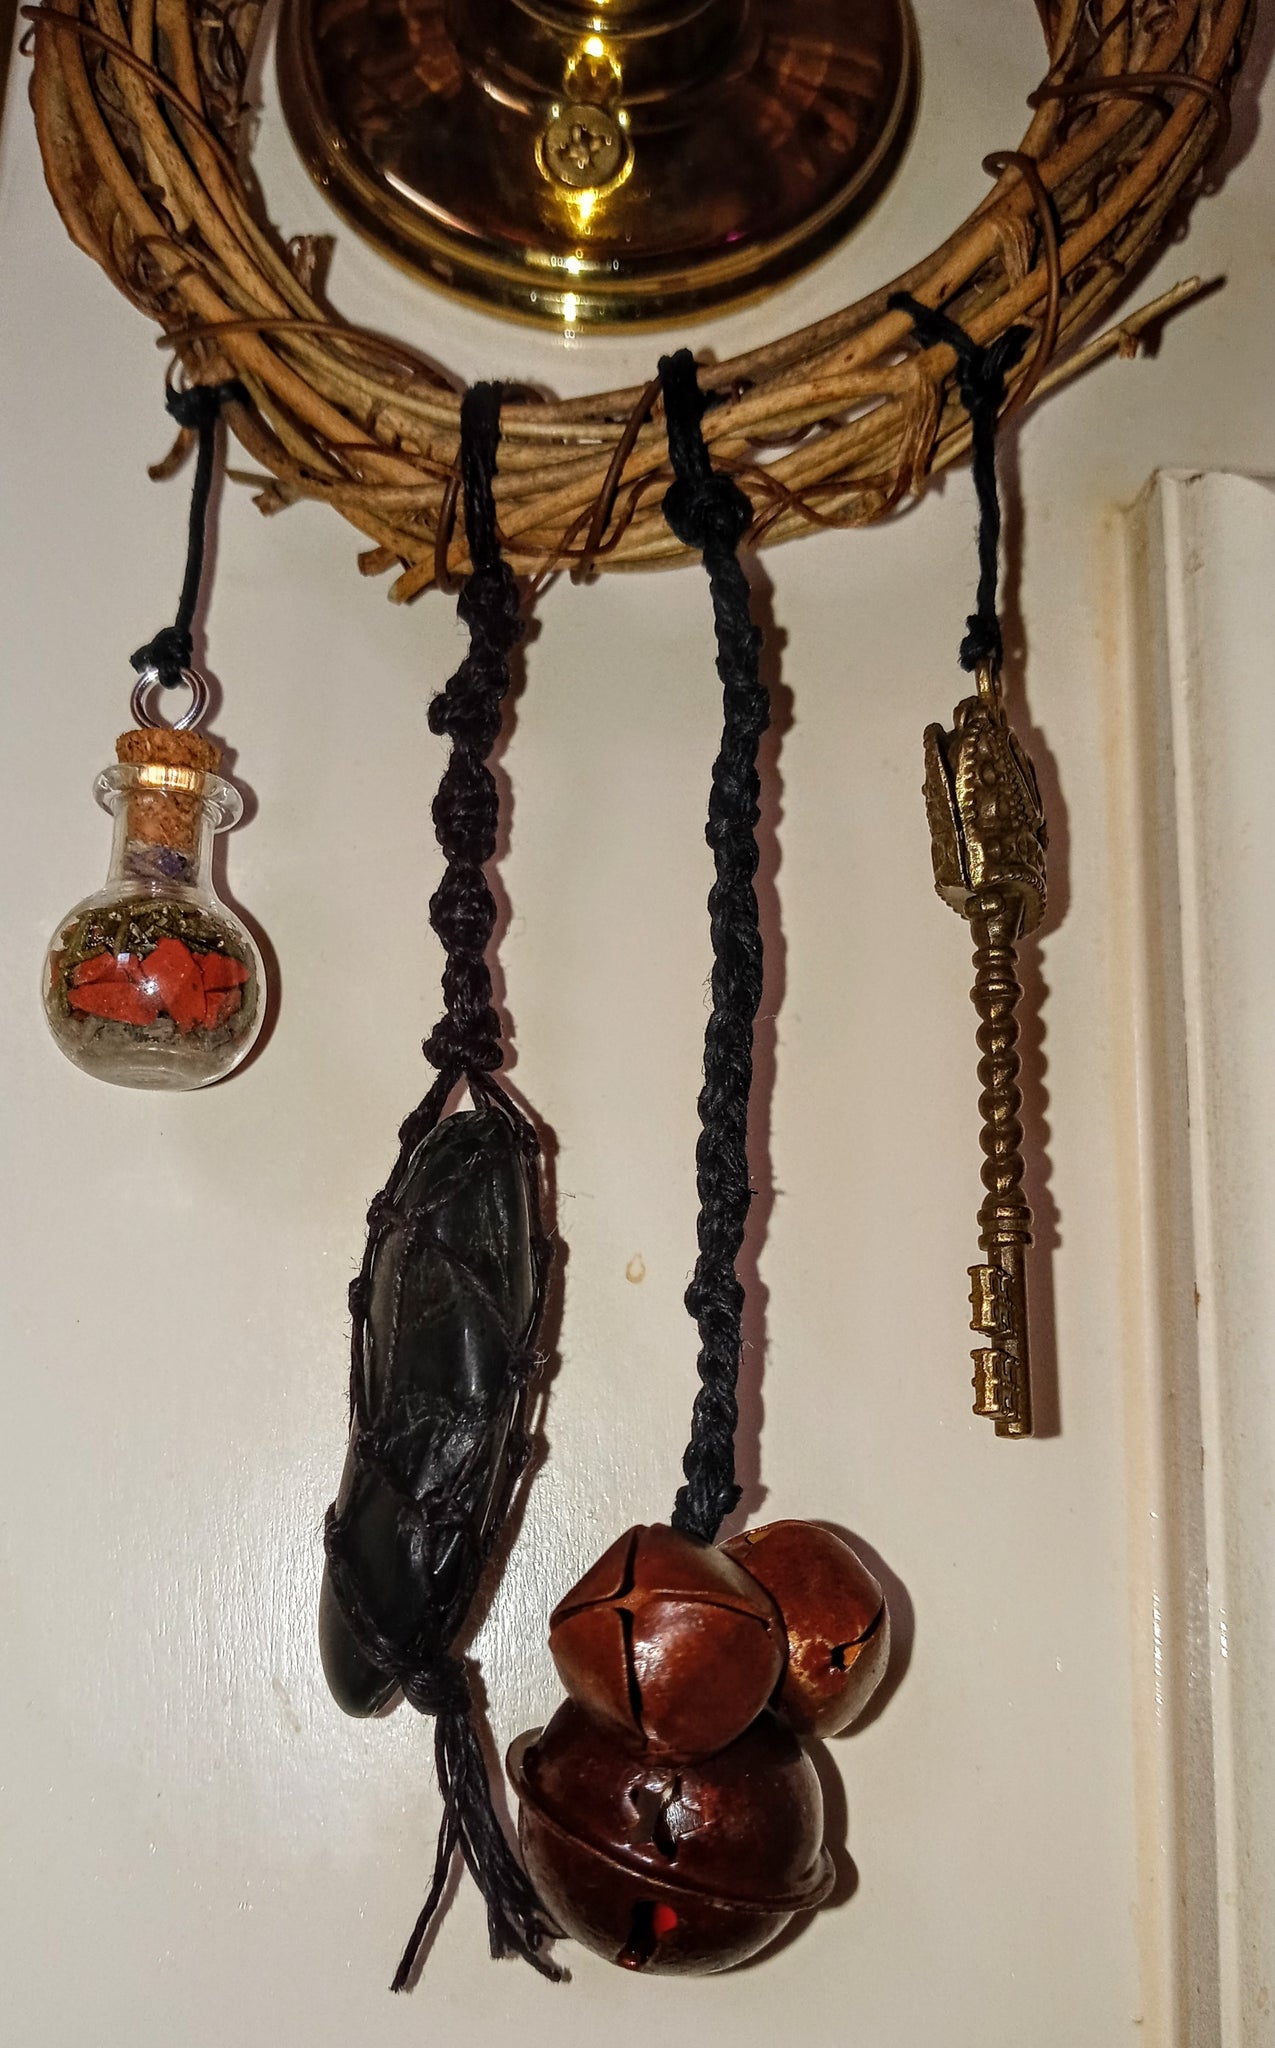 Witch Bells – In My Gypsy Bag